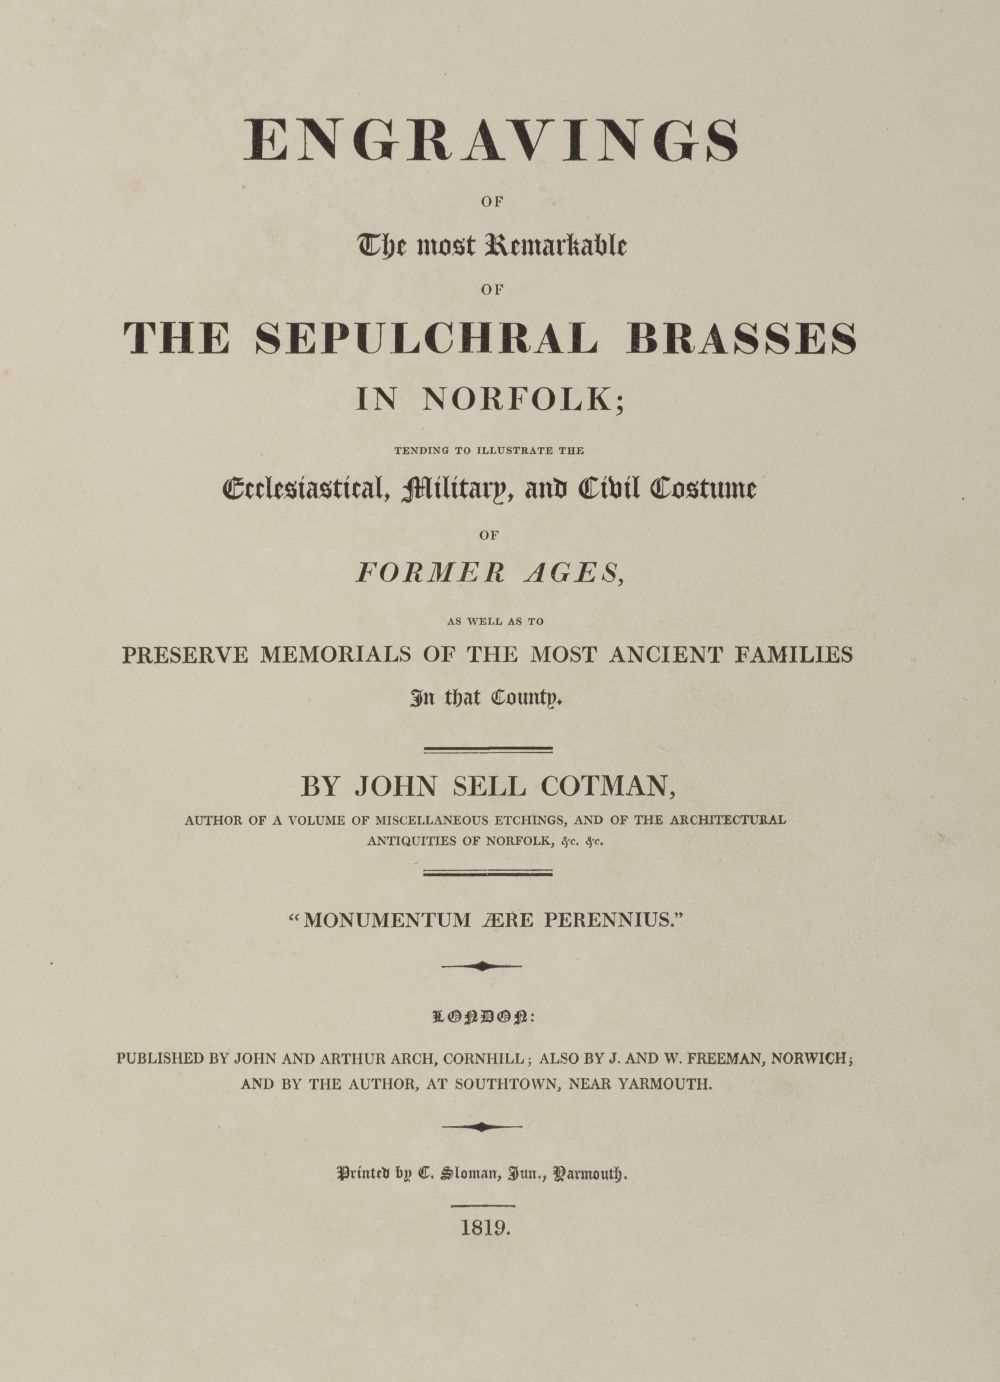 Lot 290 - Cotman (John Sell). Engravings of ... the Sepulchral Brasses in Norfolk, 1819